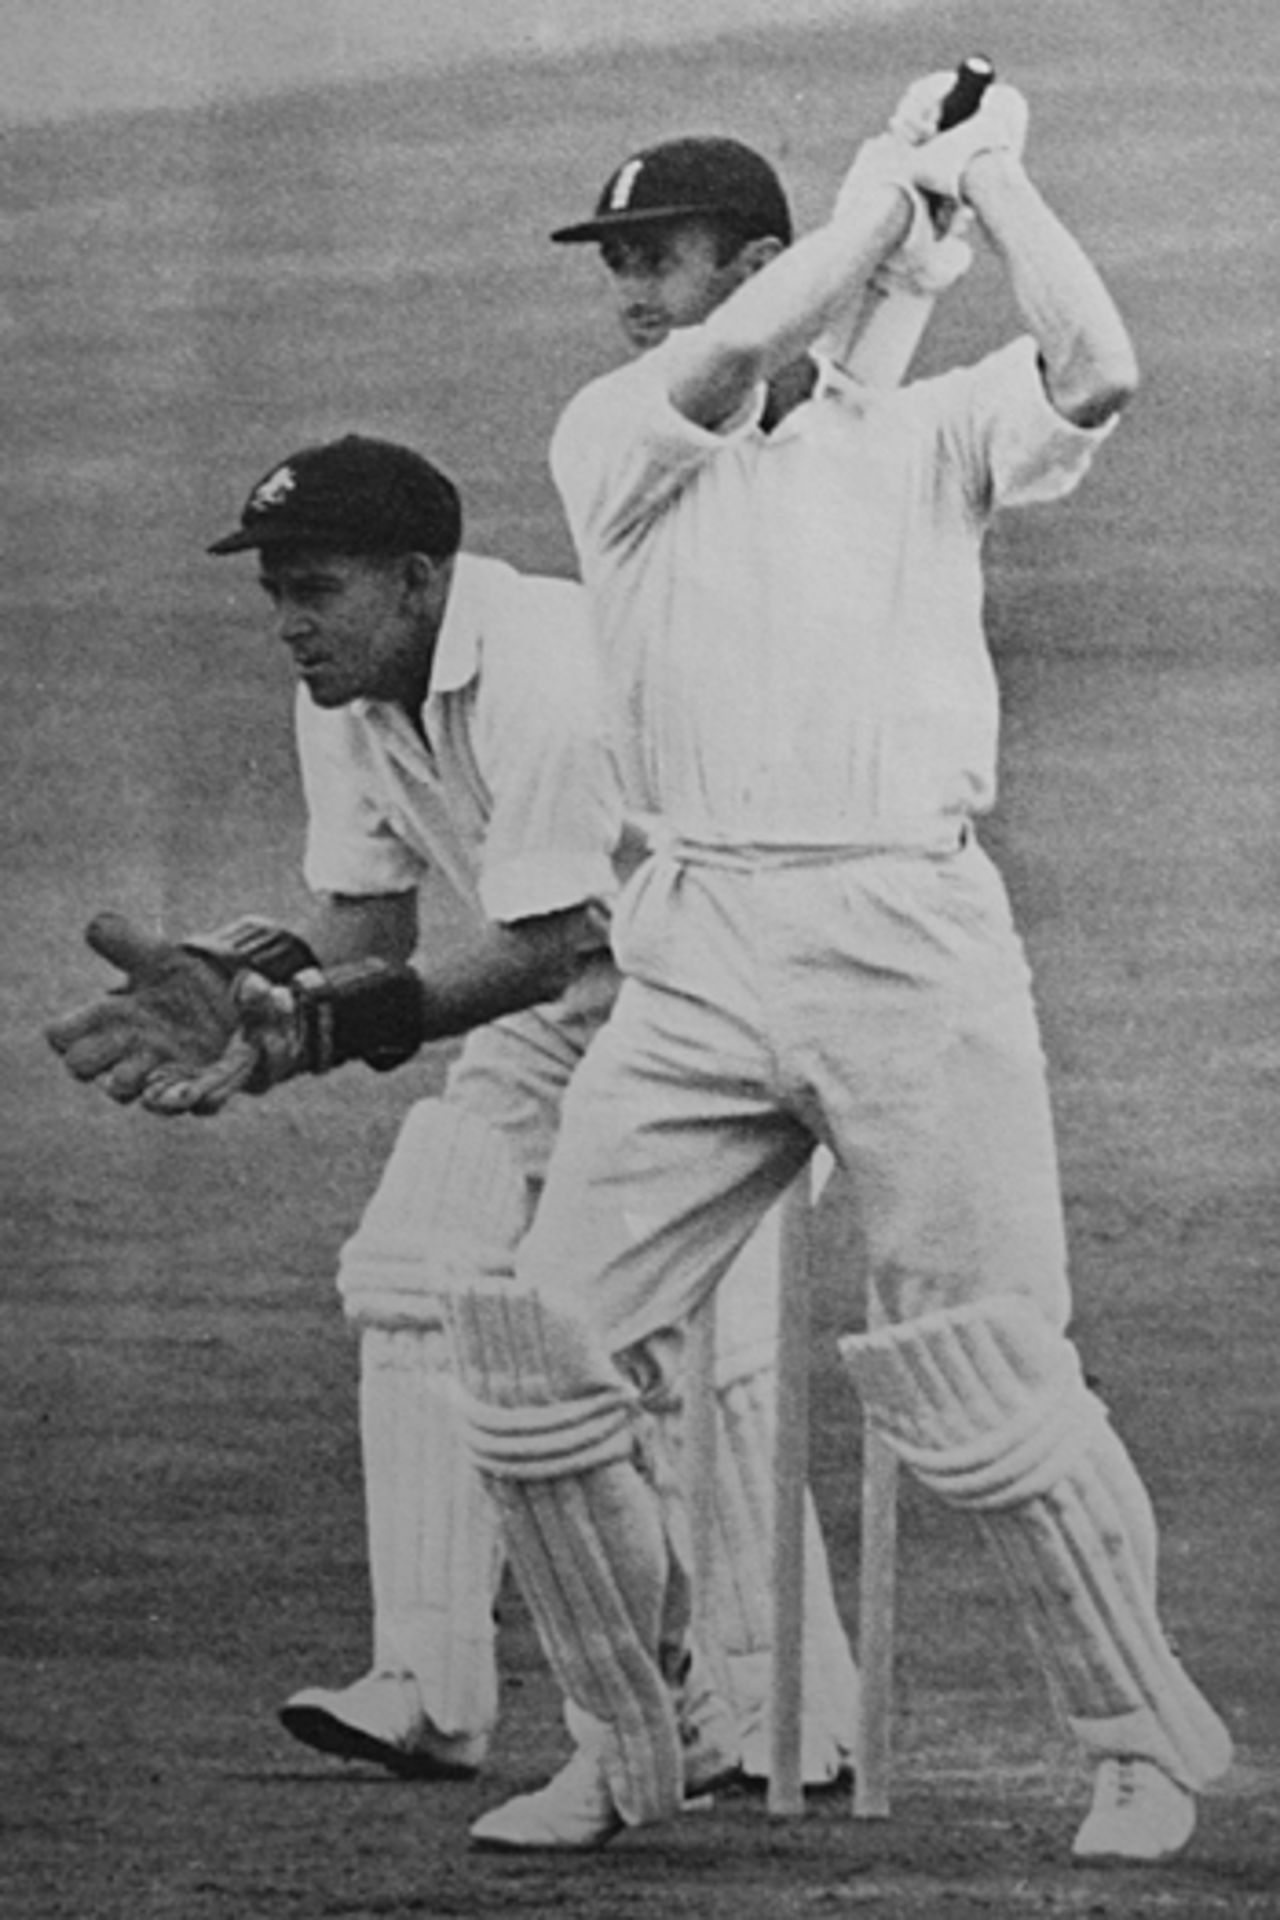 Ted Dexter batting against Australia in 1964